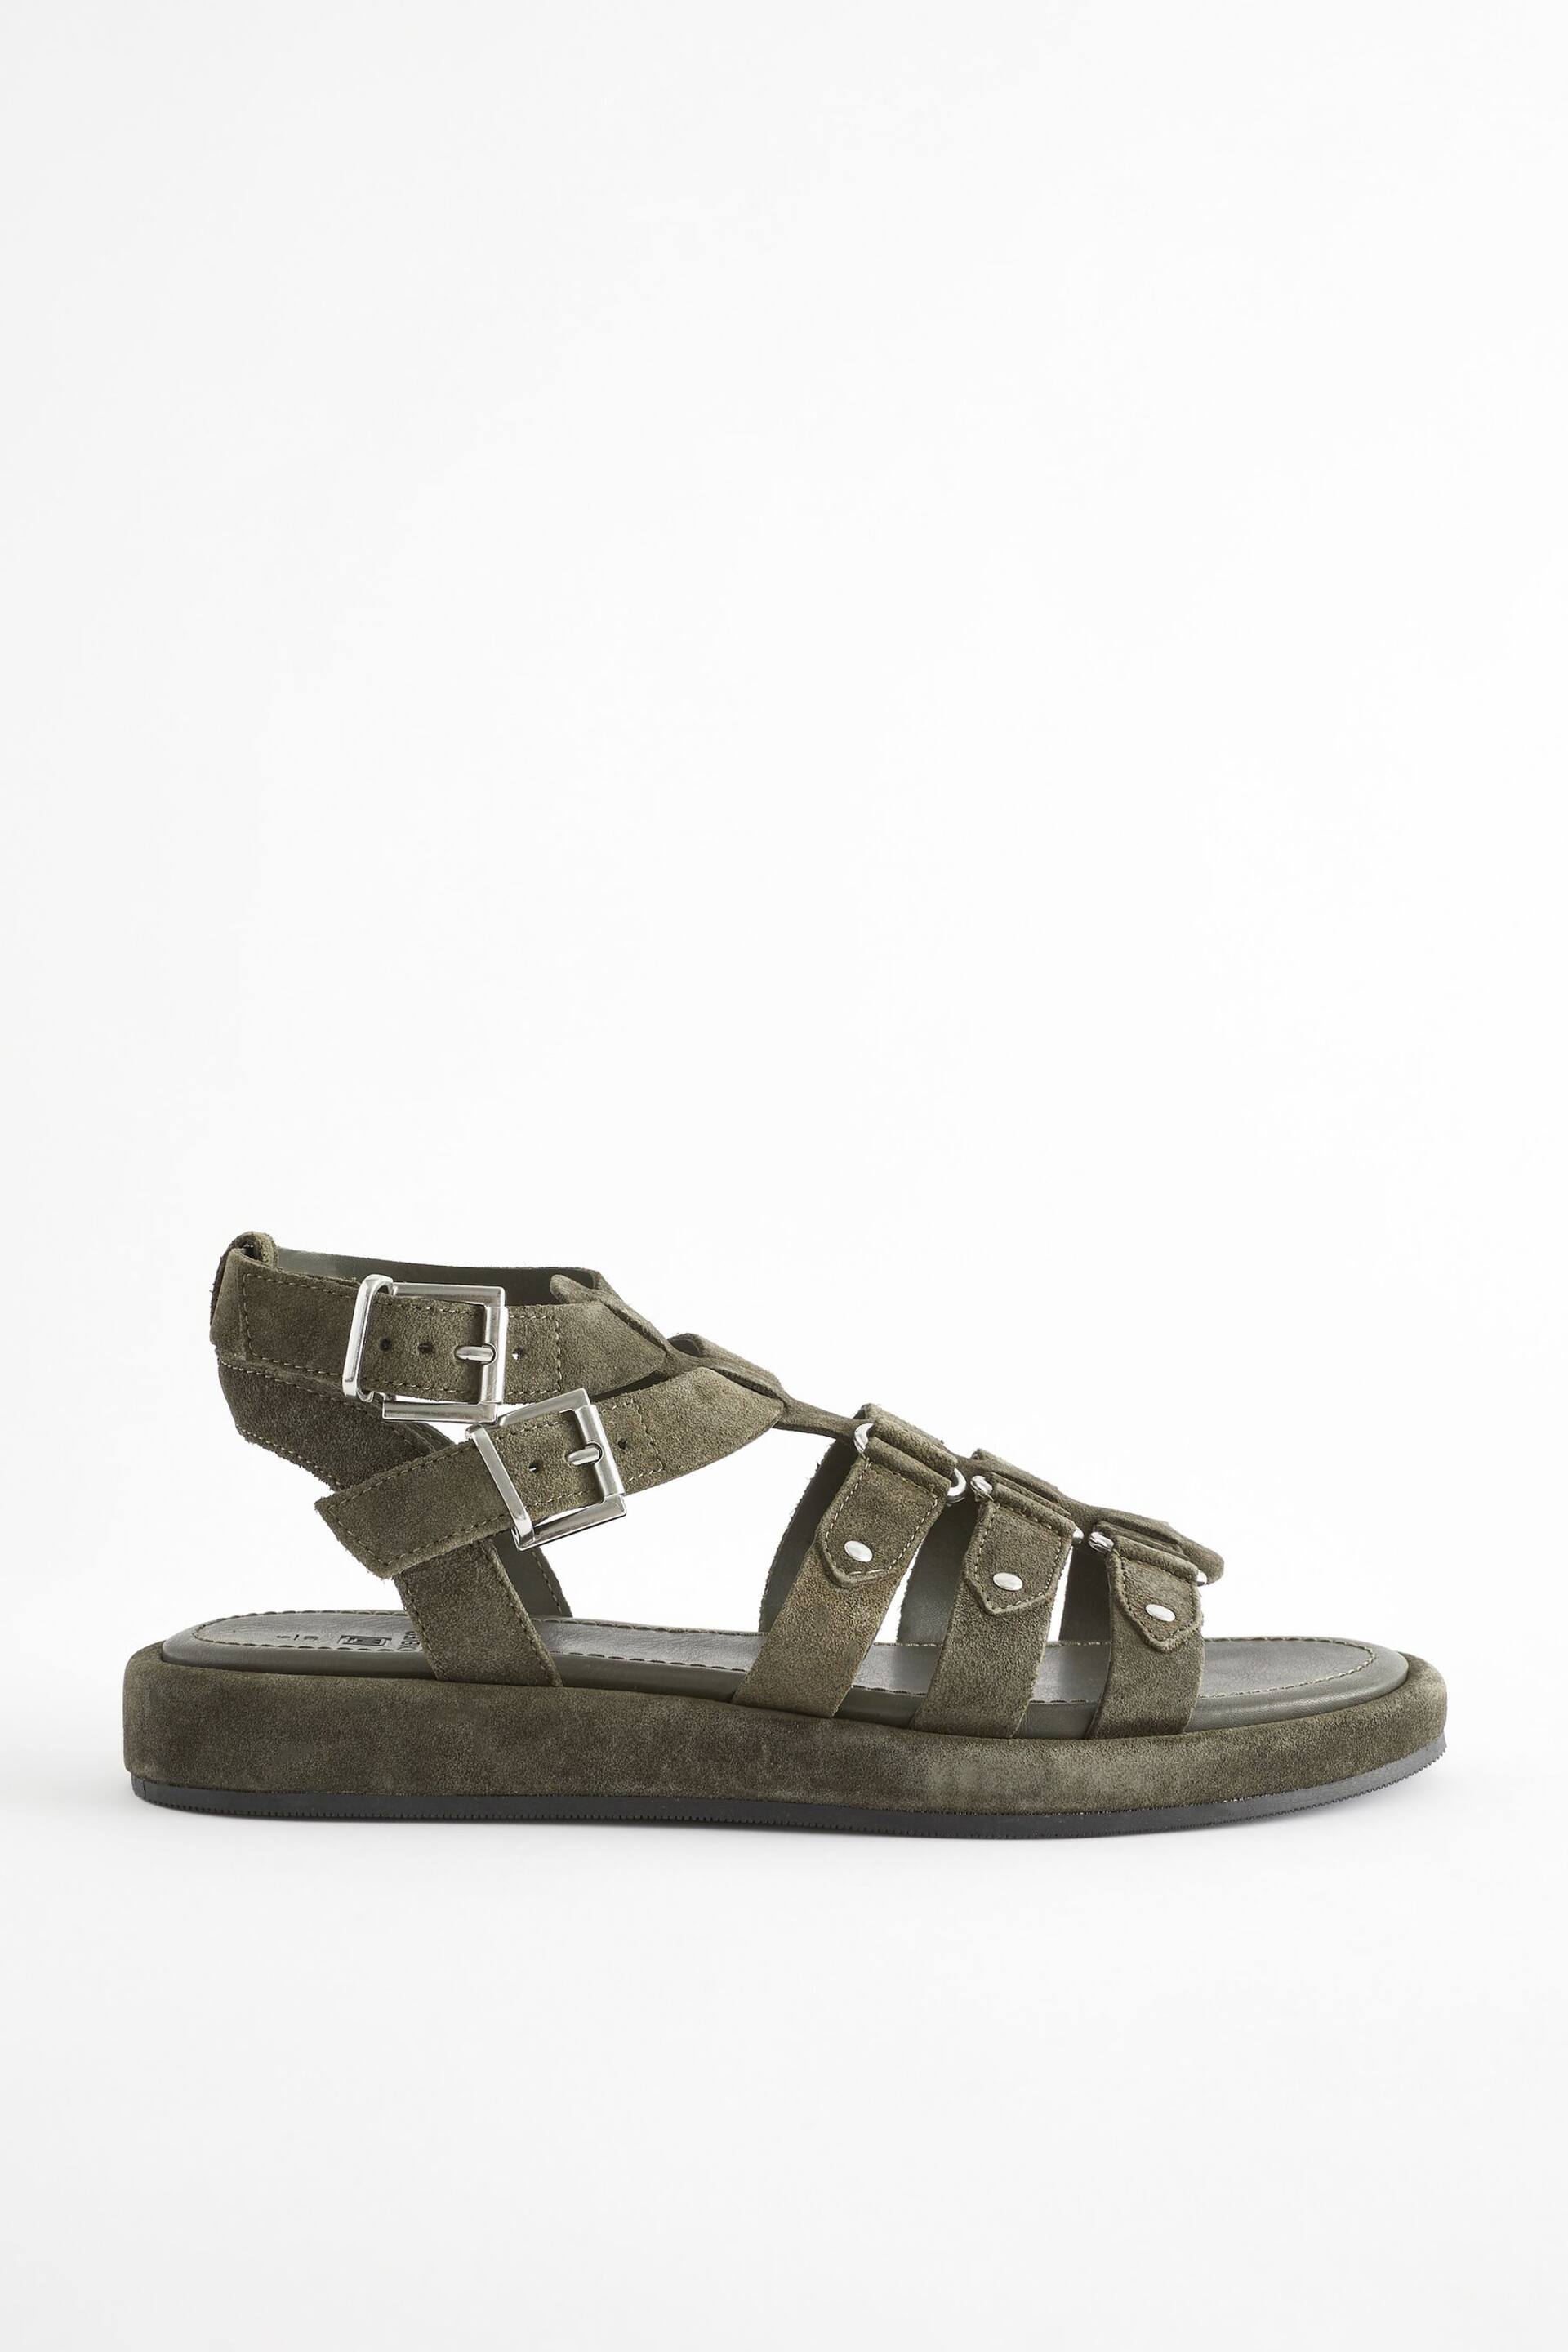 Khaki Green Regular/Wide Fit Forever Comfort® Leather Gladiator Sandals - Image 4 of 8